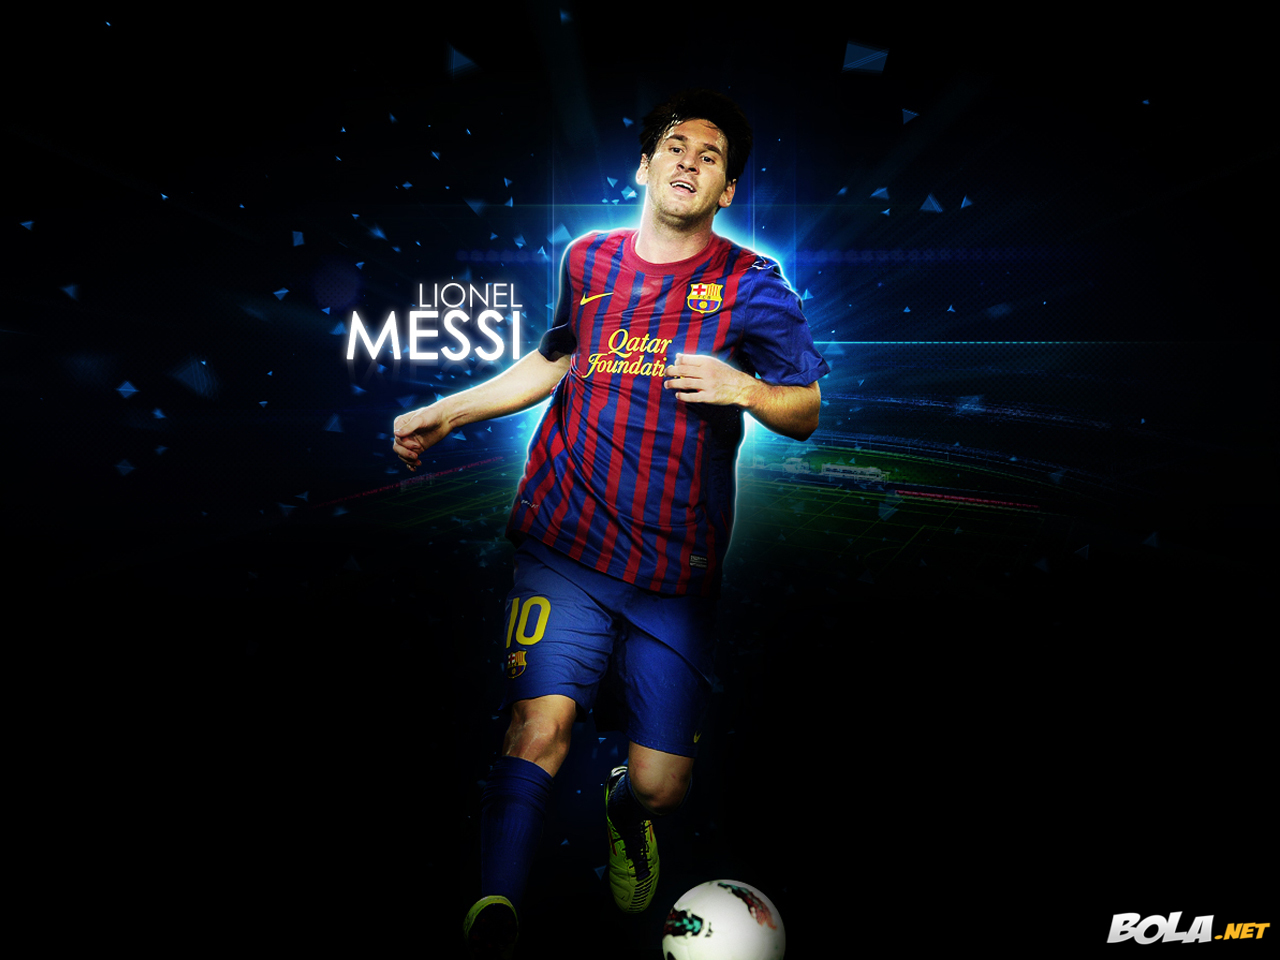 Download Wallpaper - Lionel Messi - Bola.net